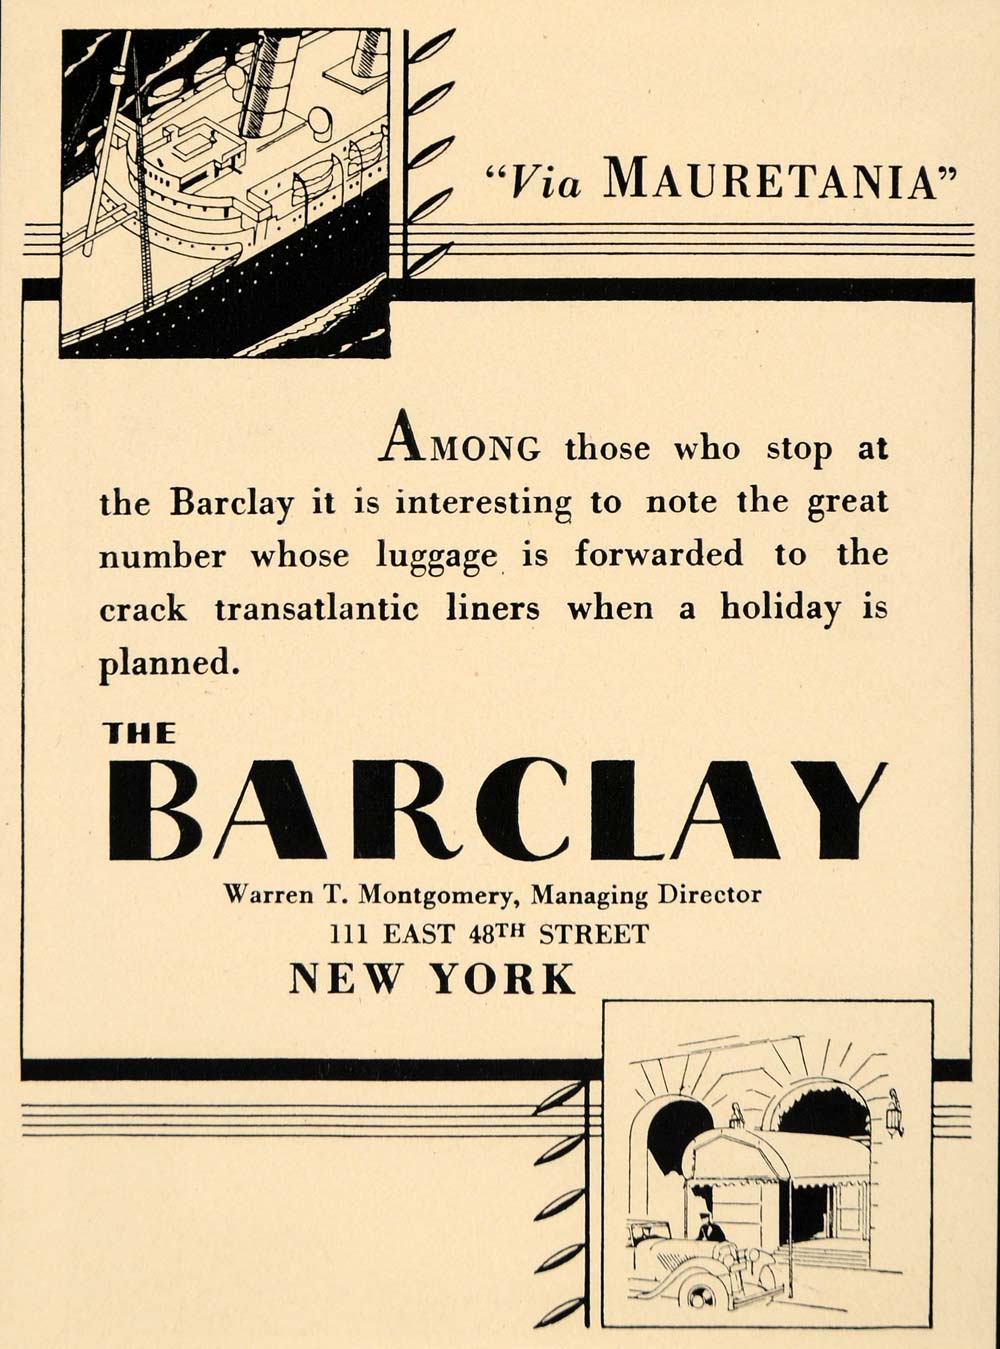 1931 Ad Barclay Hotel Mauretania Lodge New York Trip - ORIGINAL ADVERTISING F1A